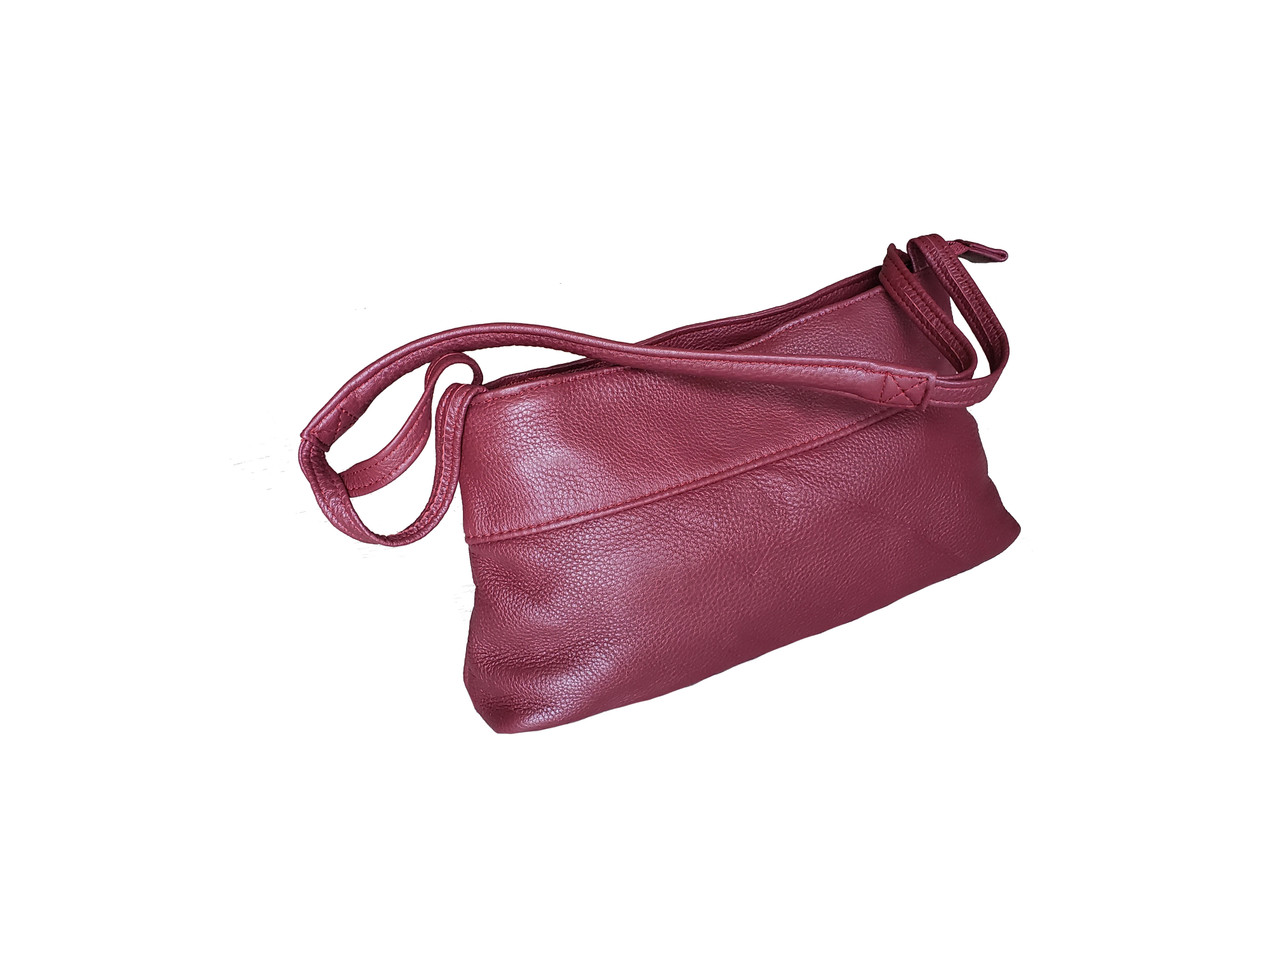 Elegant Leather Bags for Women